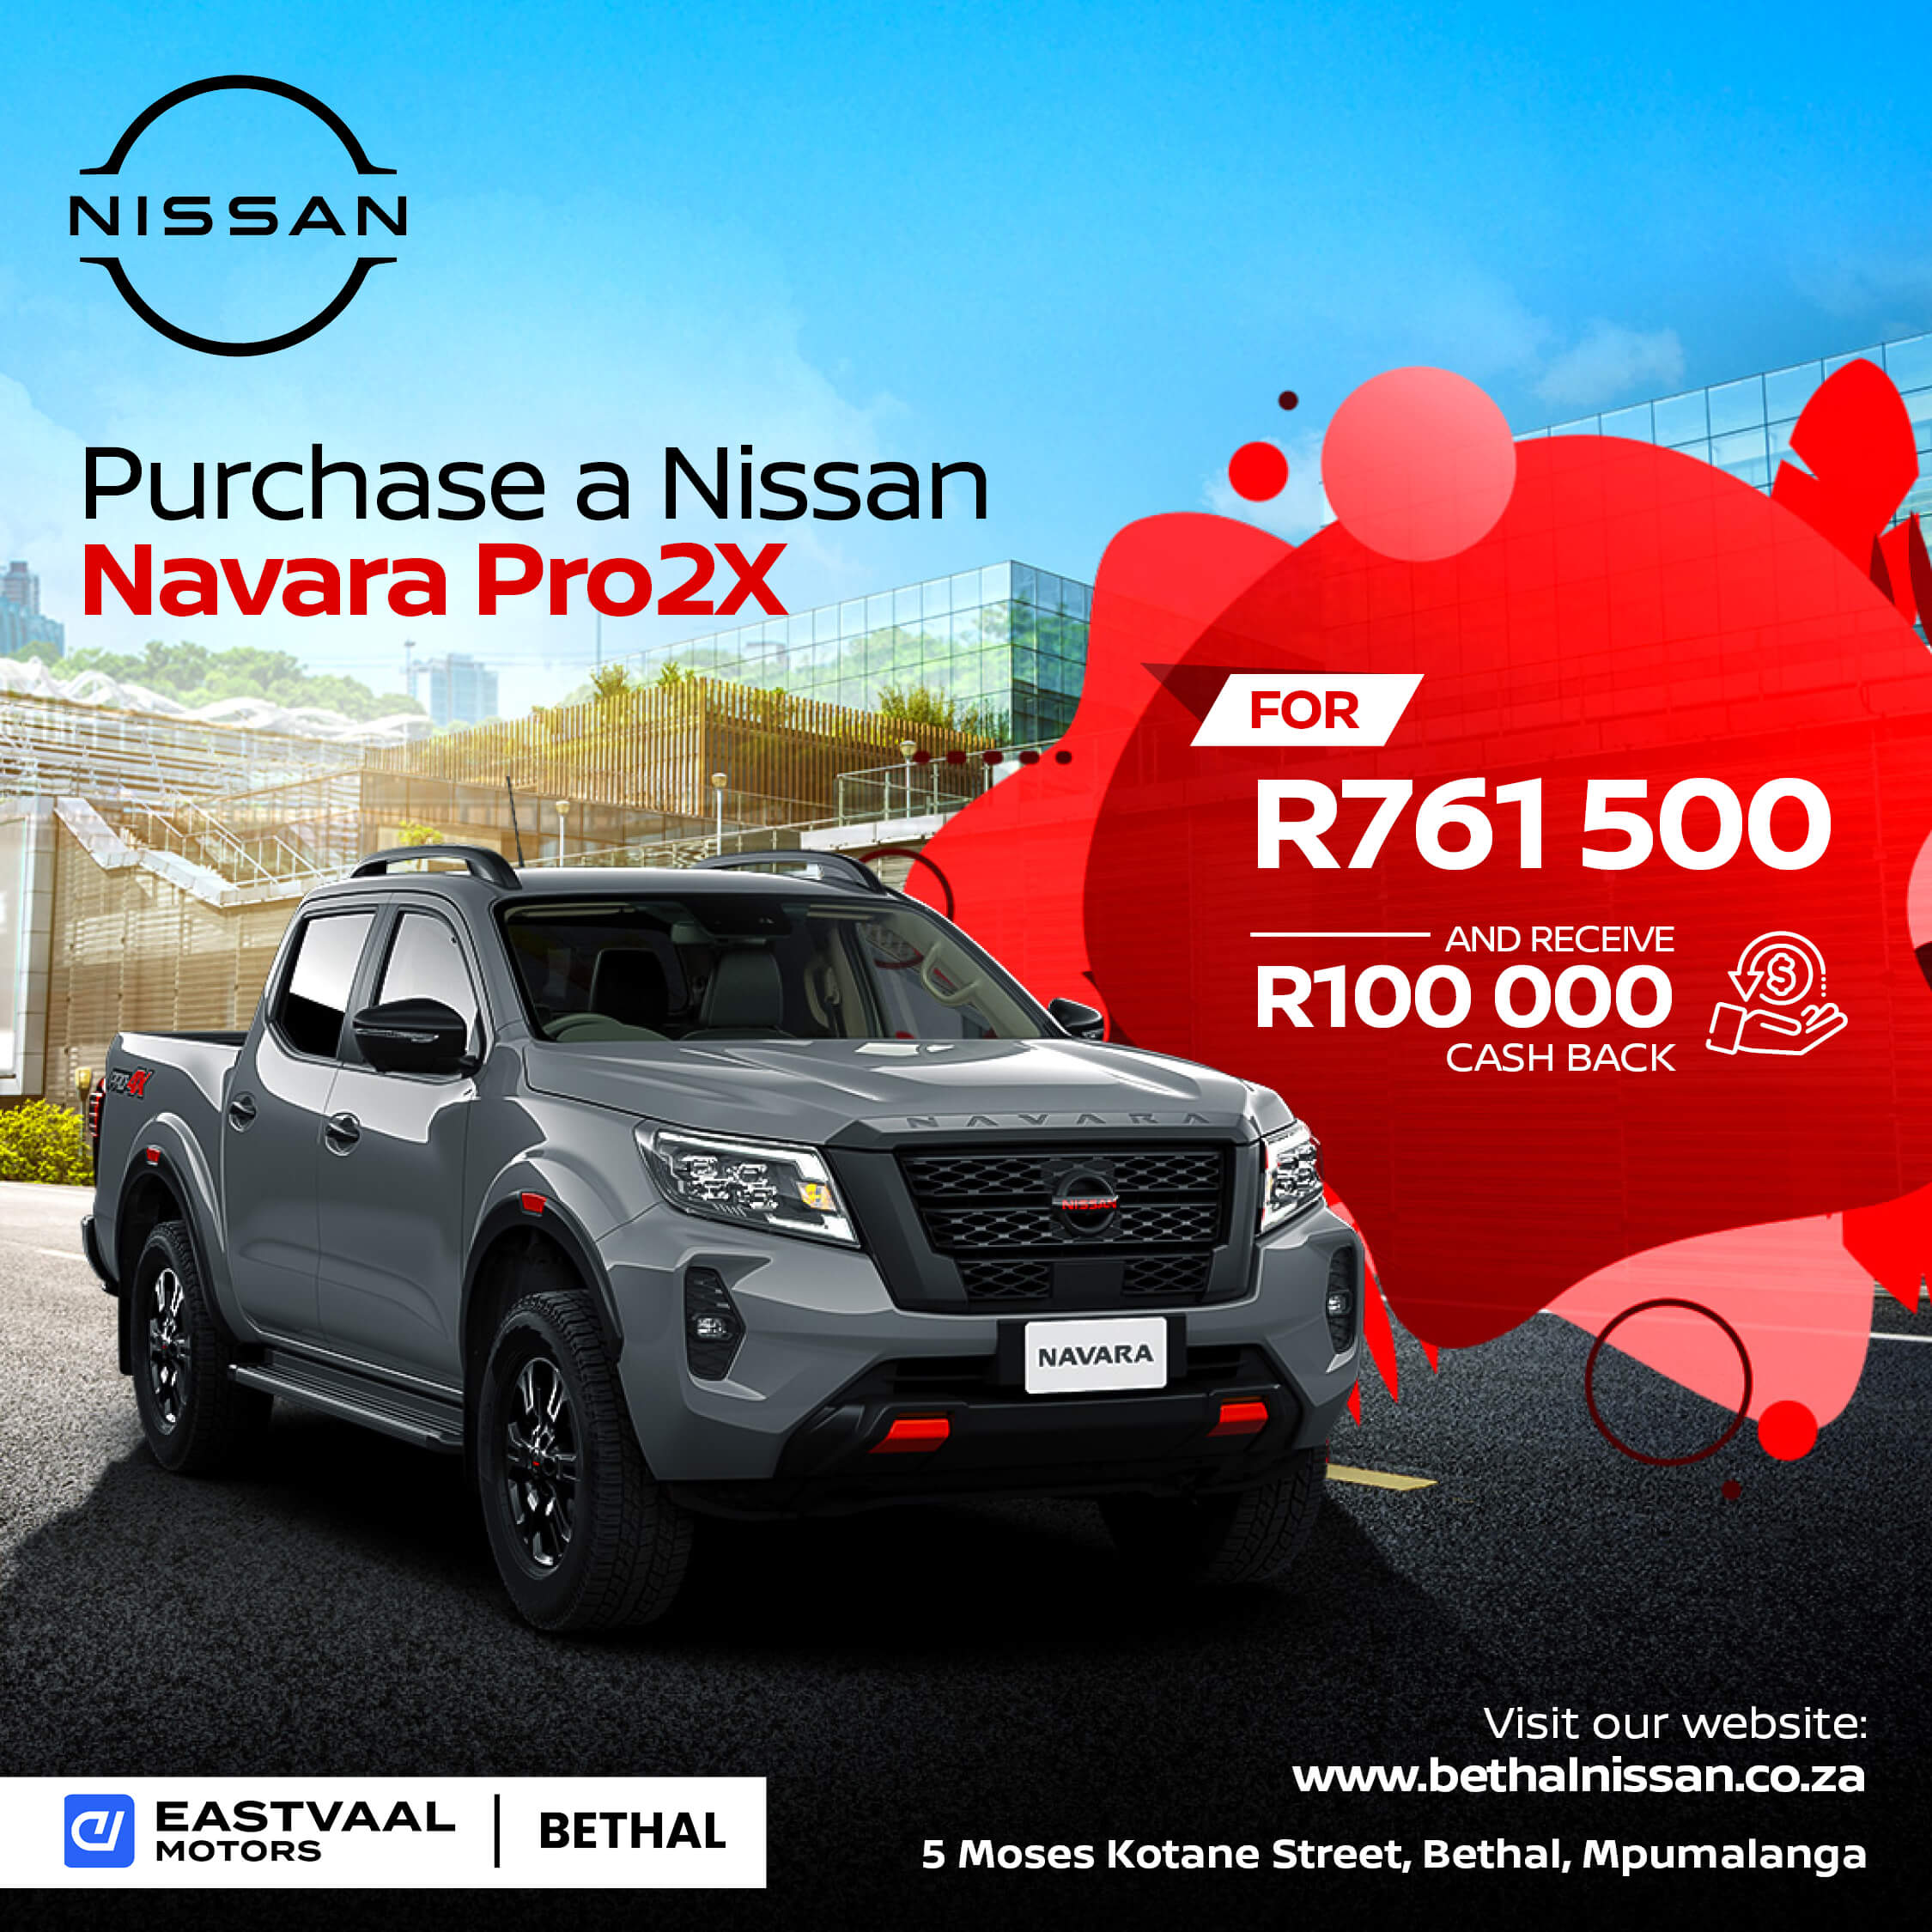 Purchase a Nissan Navara Pro2X image from Eastvaal Motors